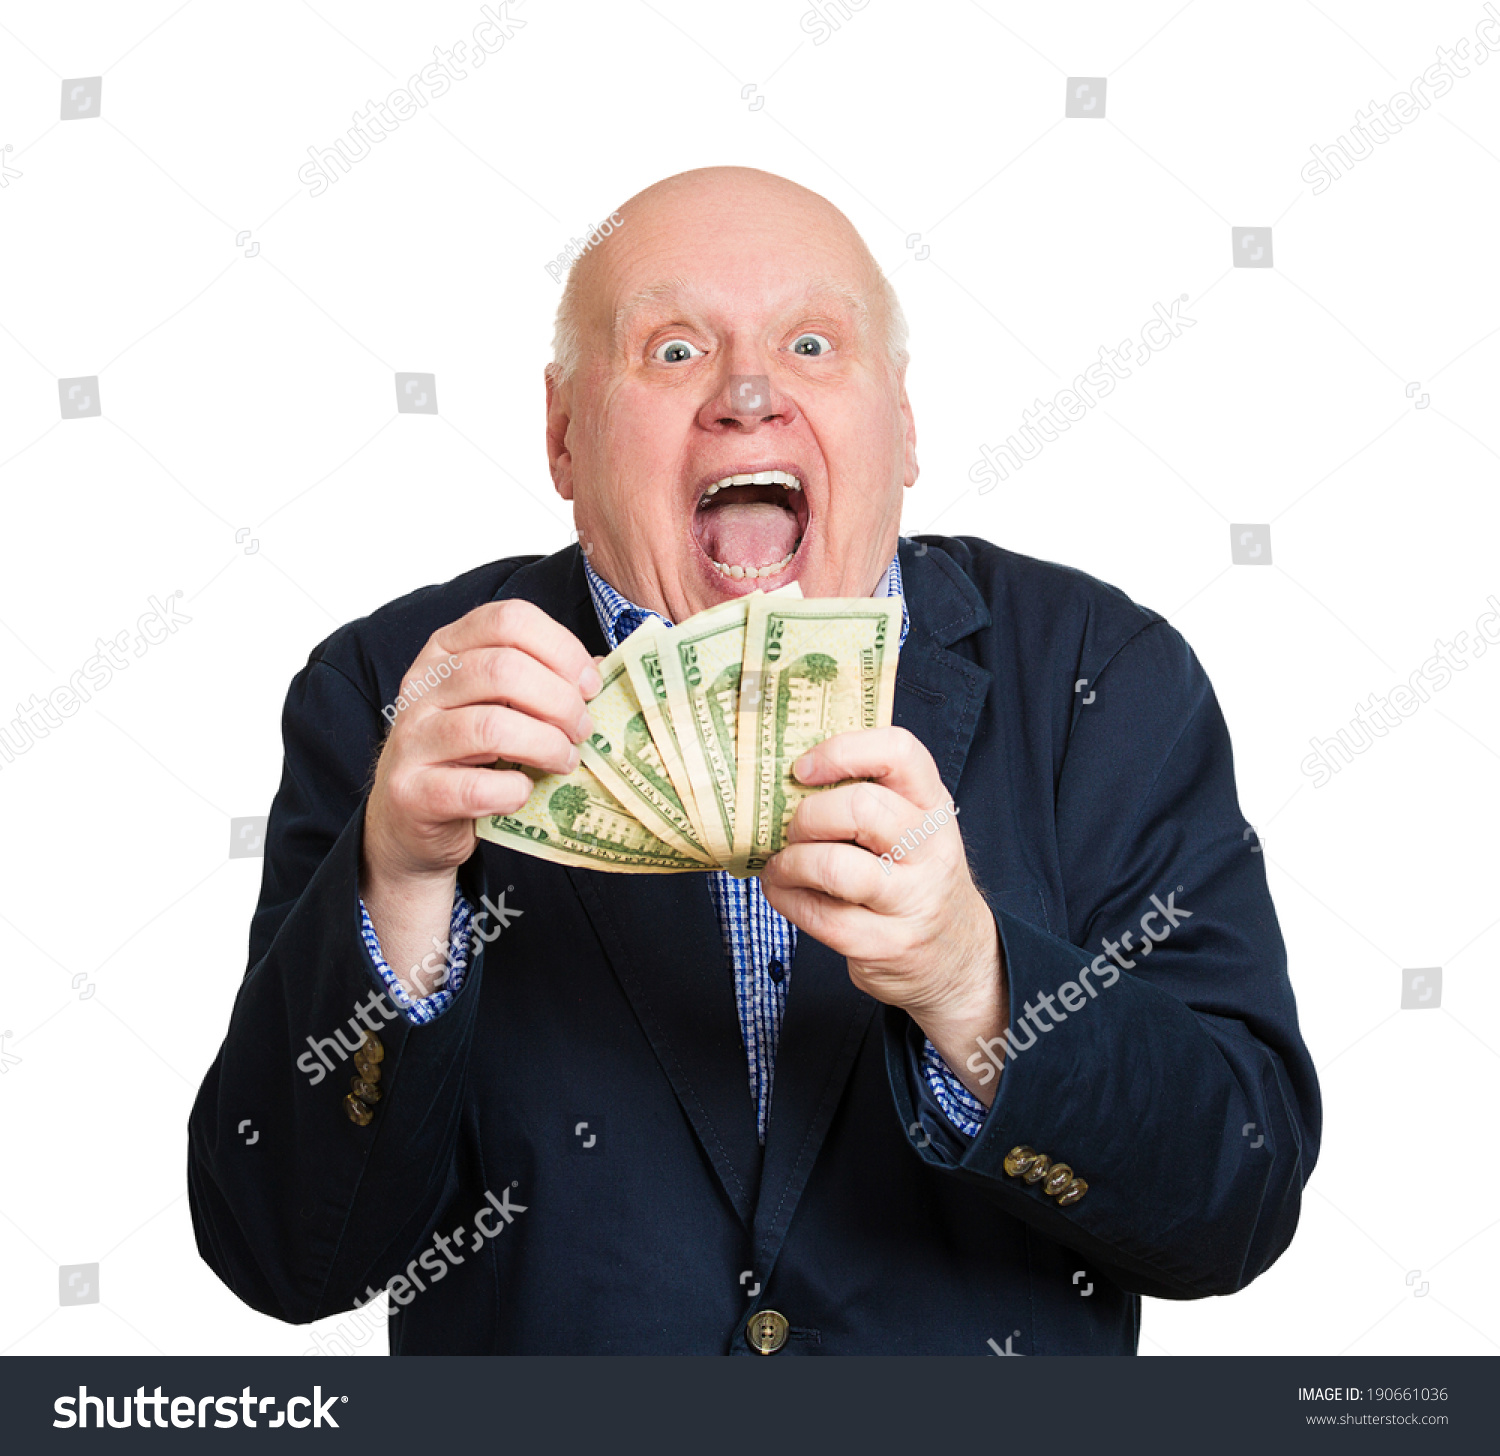 stock-photo-closeup-portrait-happy-excited-successful-senior-lucky-elderly-man-holding-money-dollar-bills-in-190661036.jpg